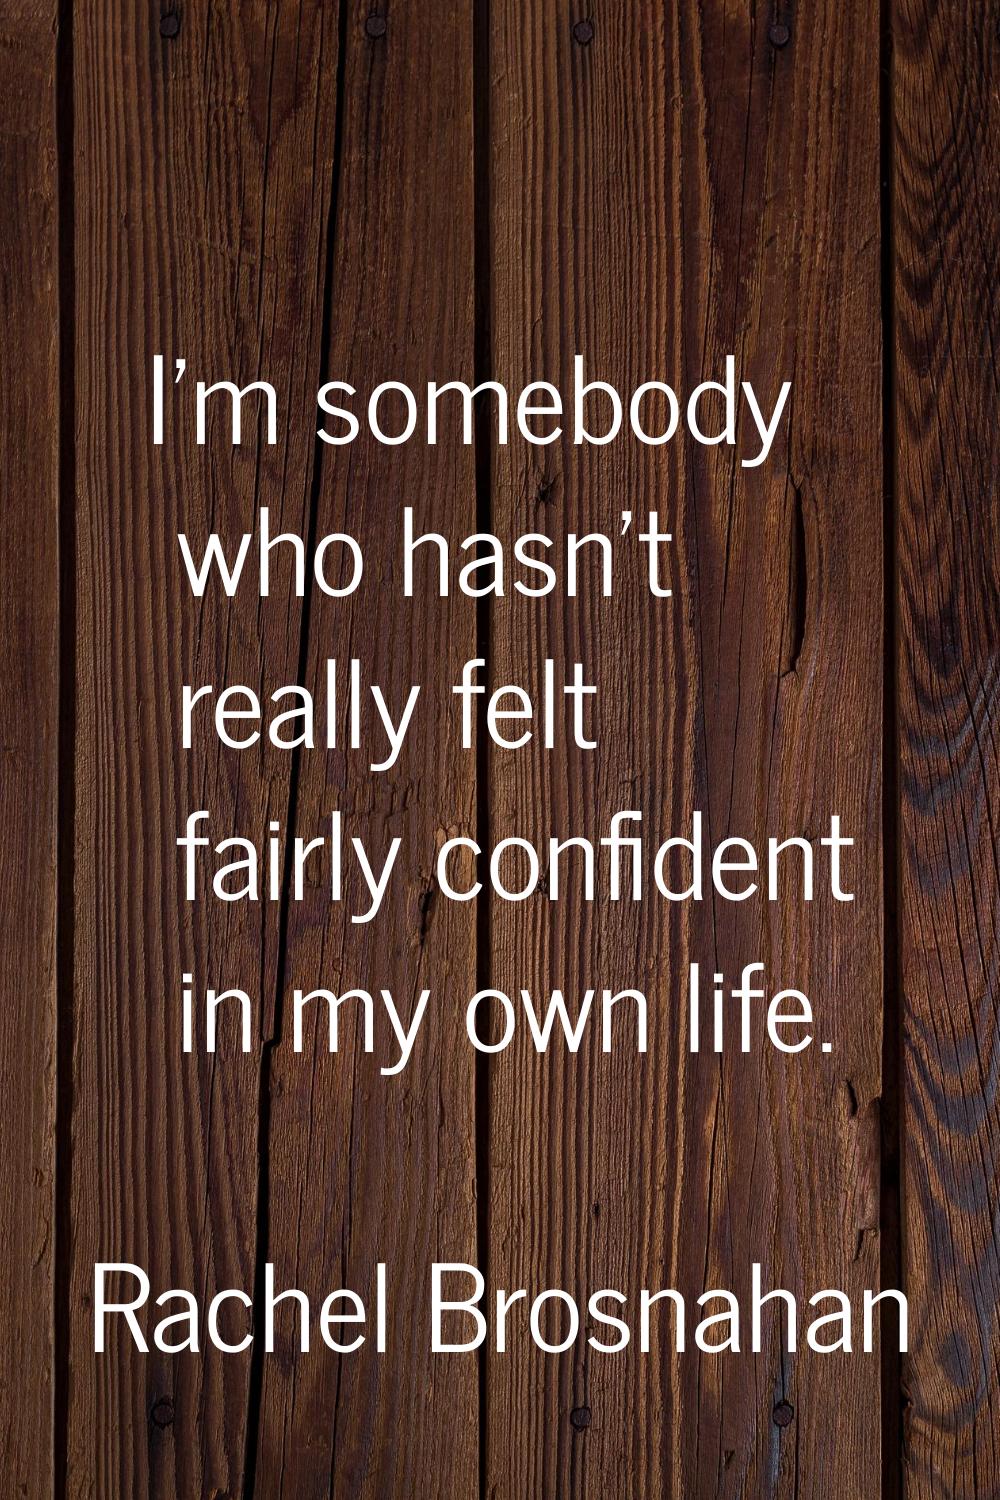 I'm somebody who hasn't really felt fairly confident in my own life.